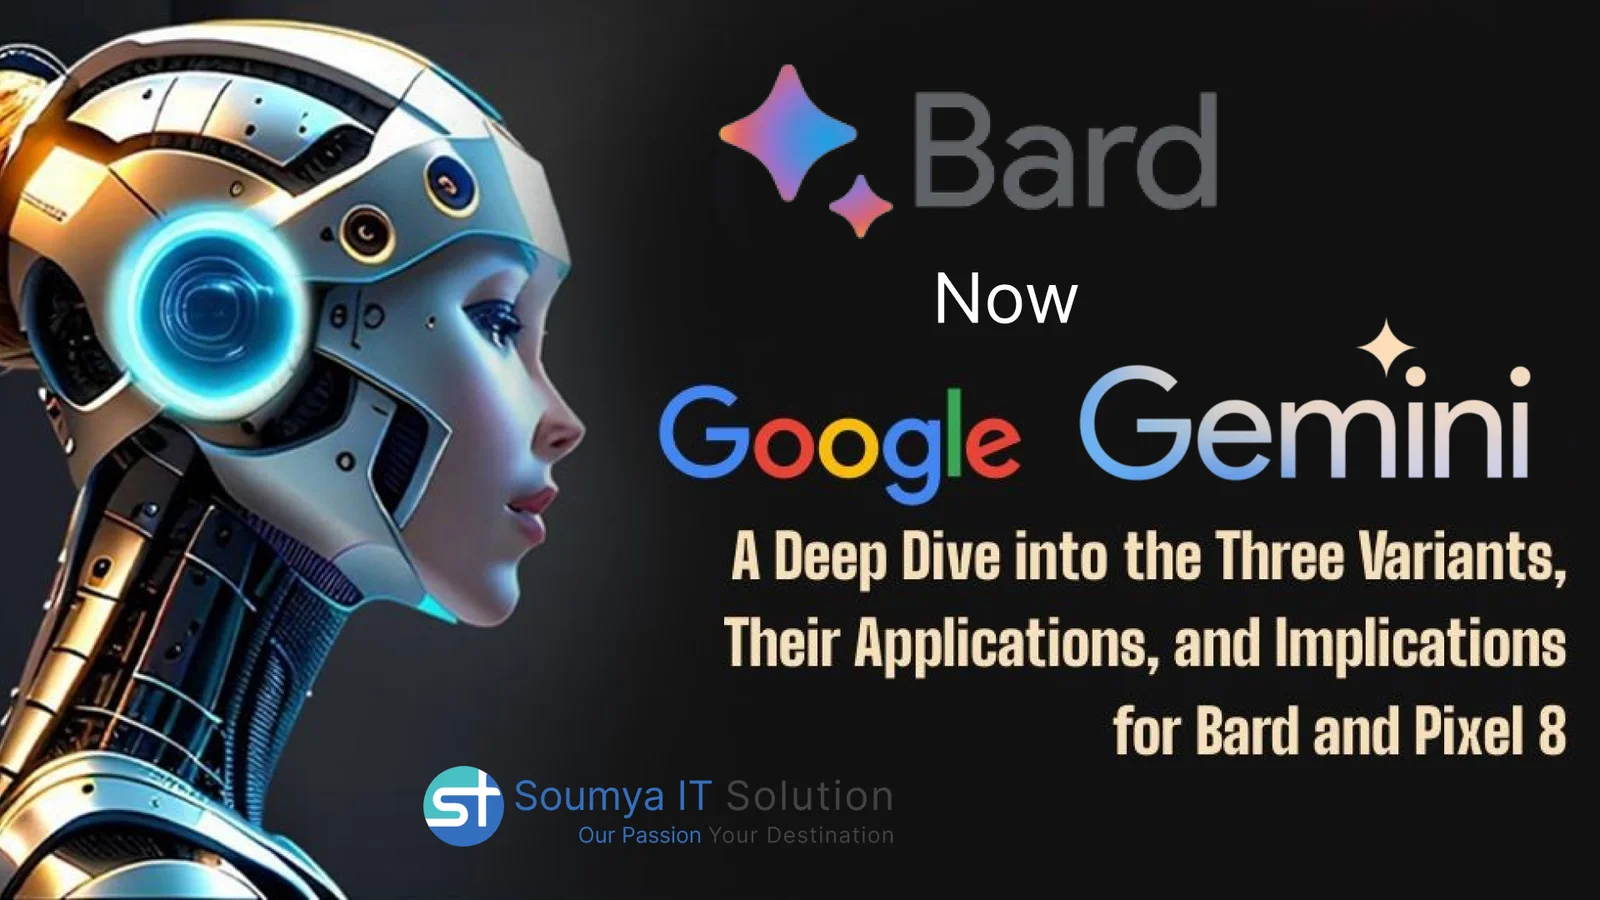 Google Bard is now called Gemini